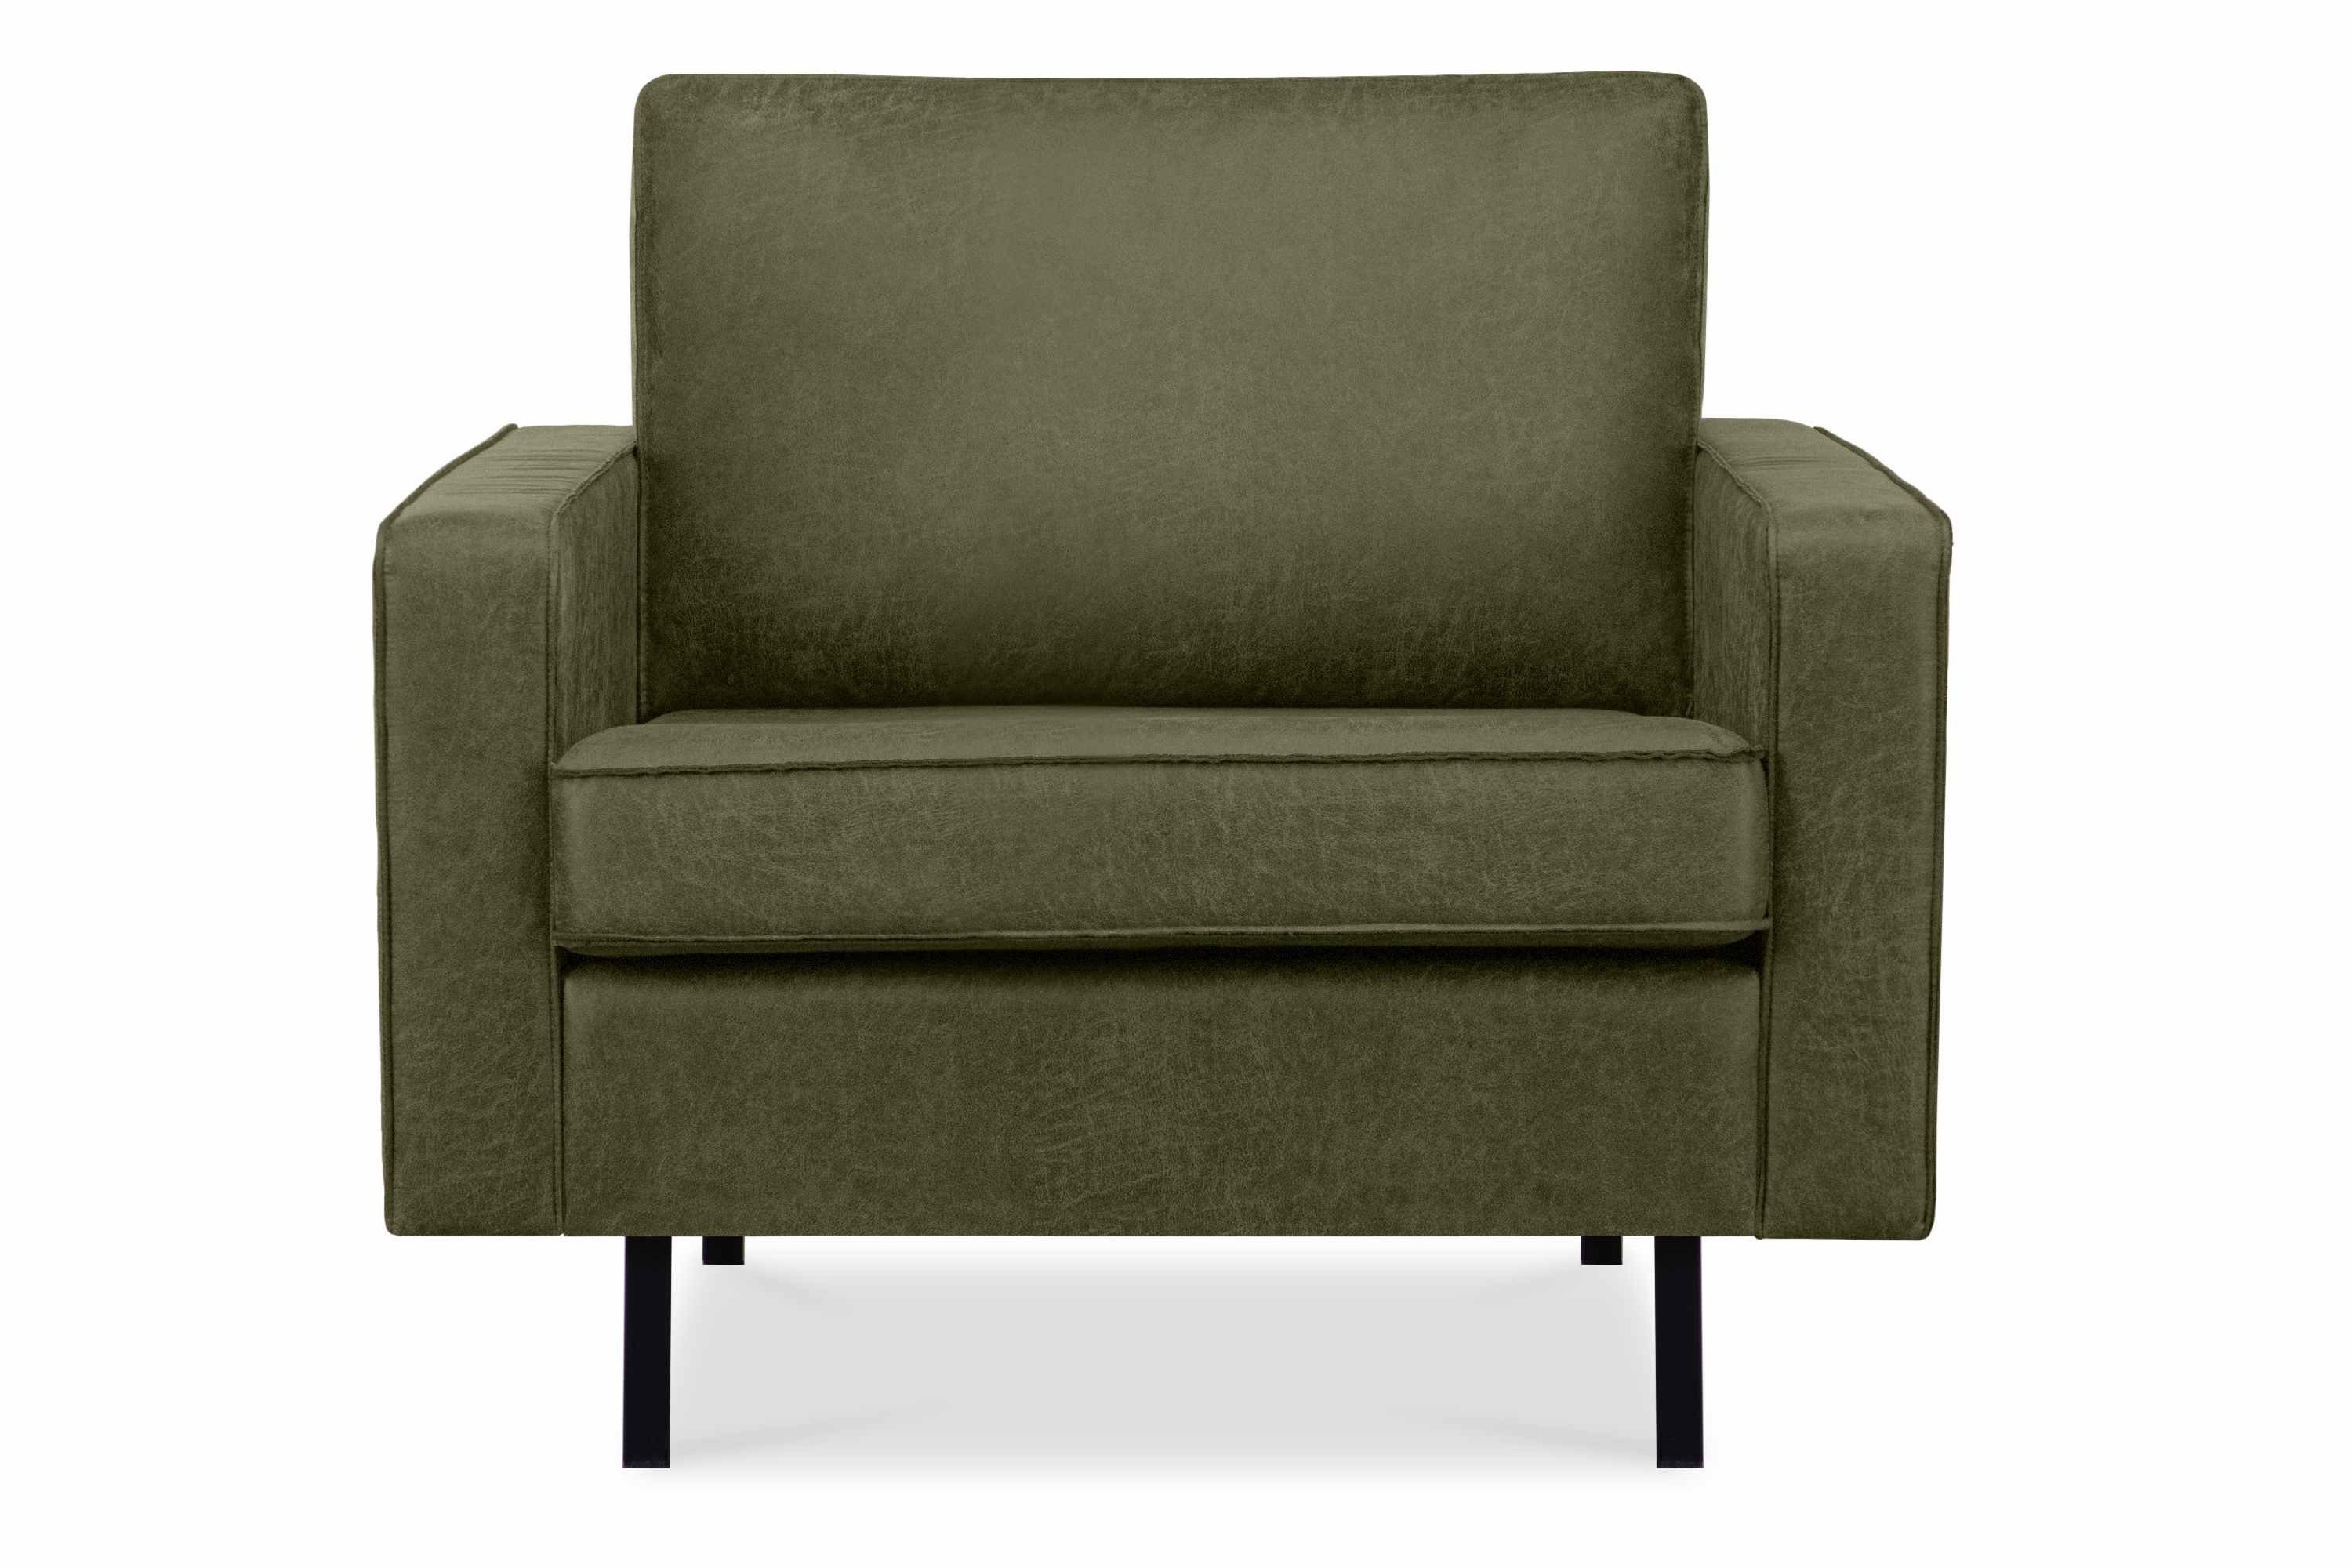 Konsimo Sessel INVIA Sessel, Grundschicht: Echtleder, Hergestellt in EU, Vintage, Loft-Stil grün | grün | grün